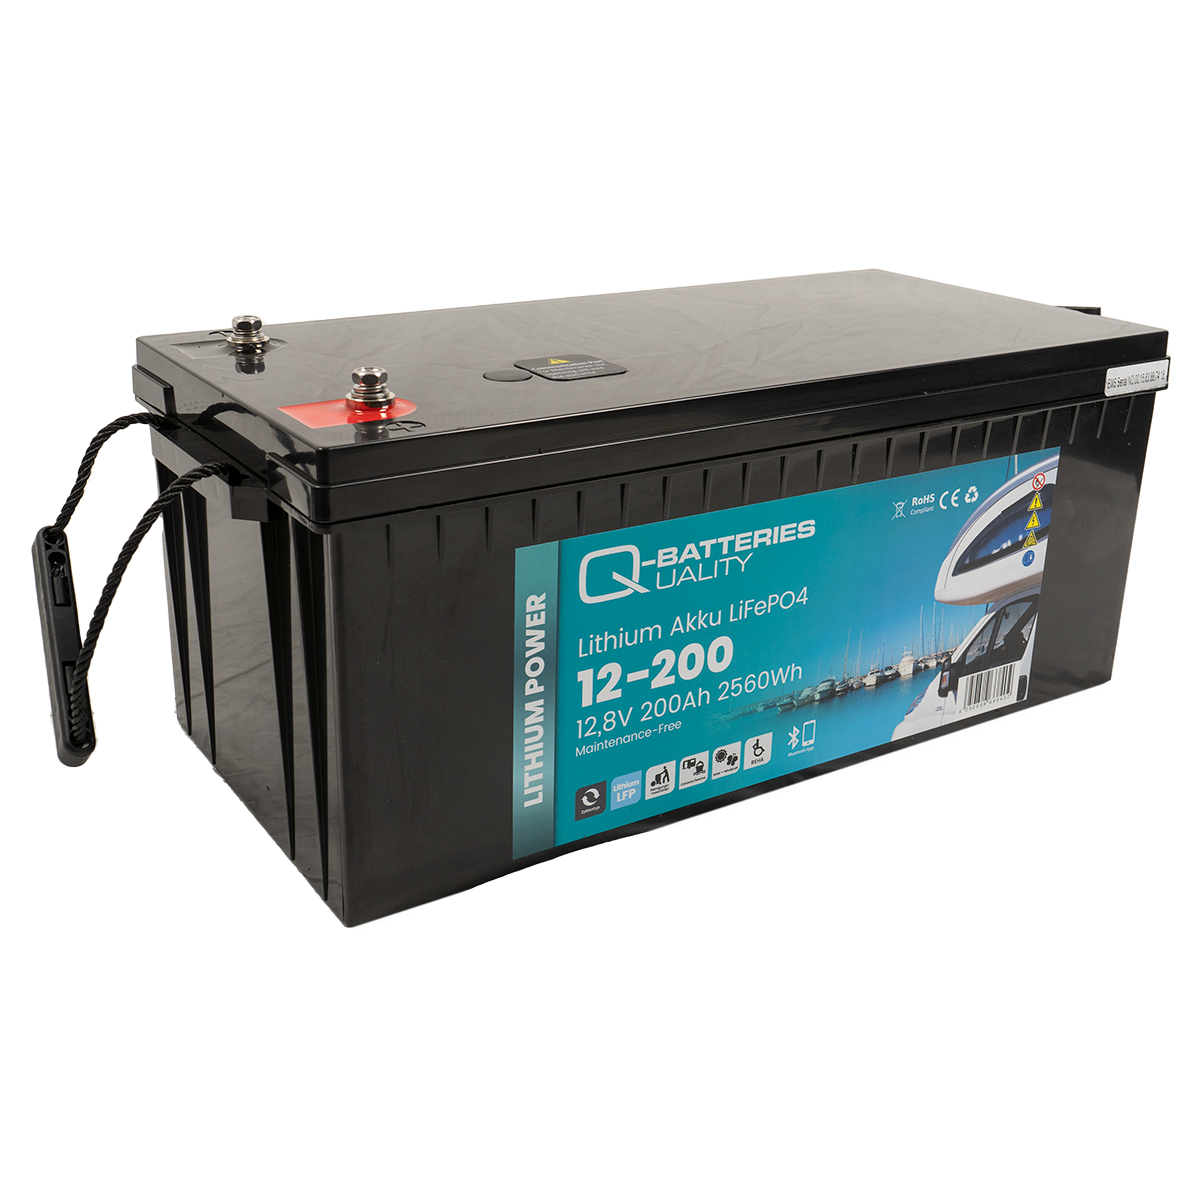 Q-Batteries Lithium Wohnmobilbatterie 12-200 12,8V 200Ah 2560Wh LiFePO4 Akku